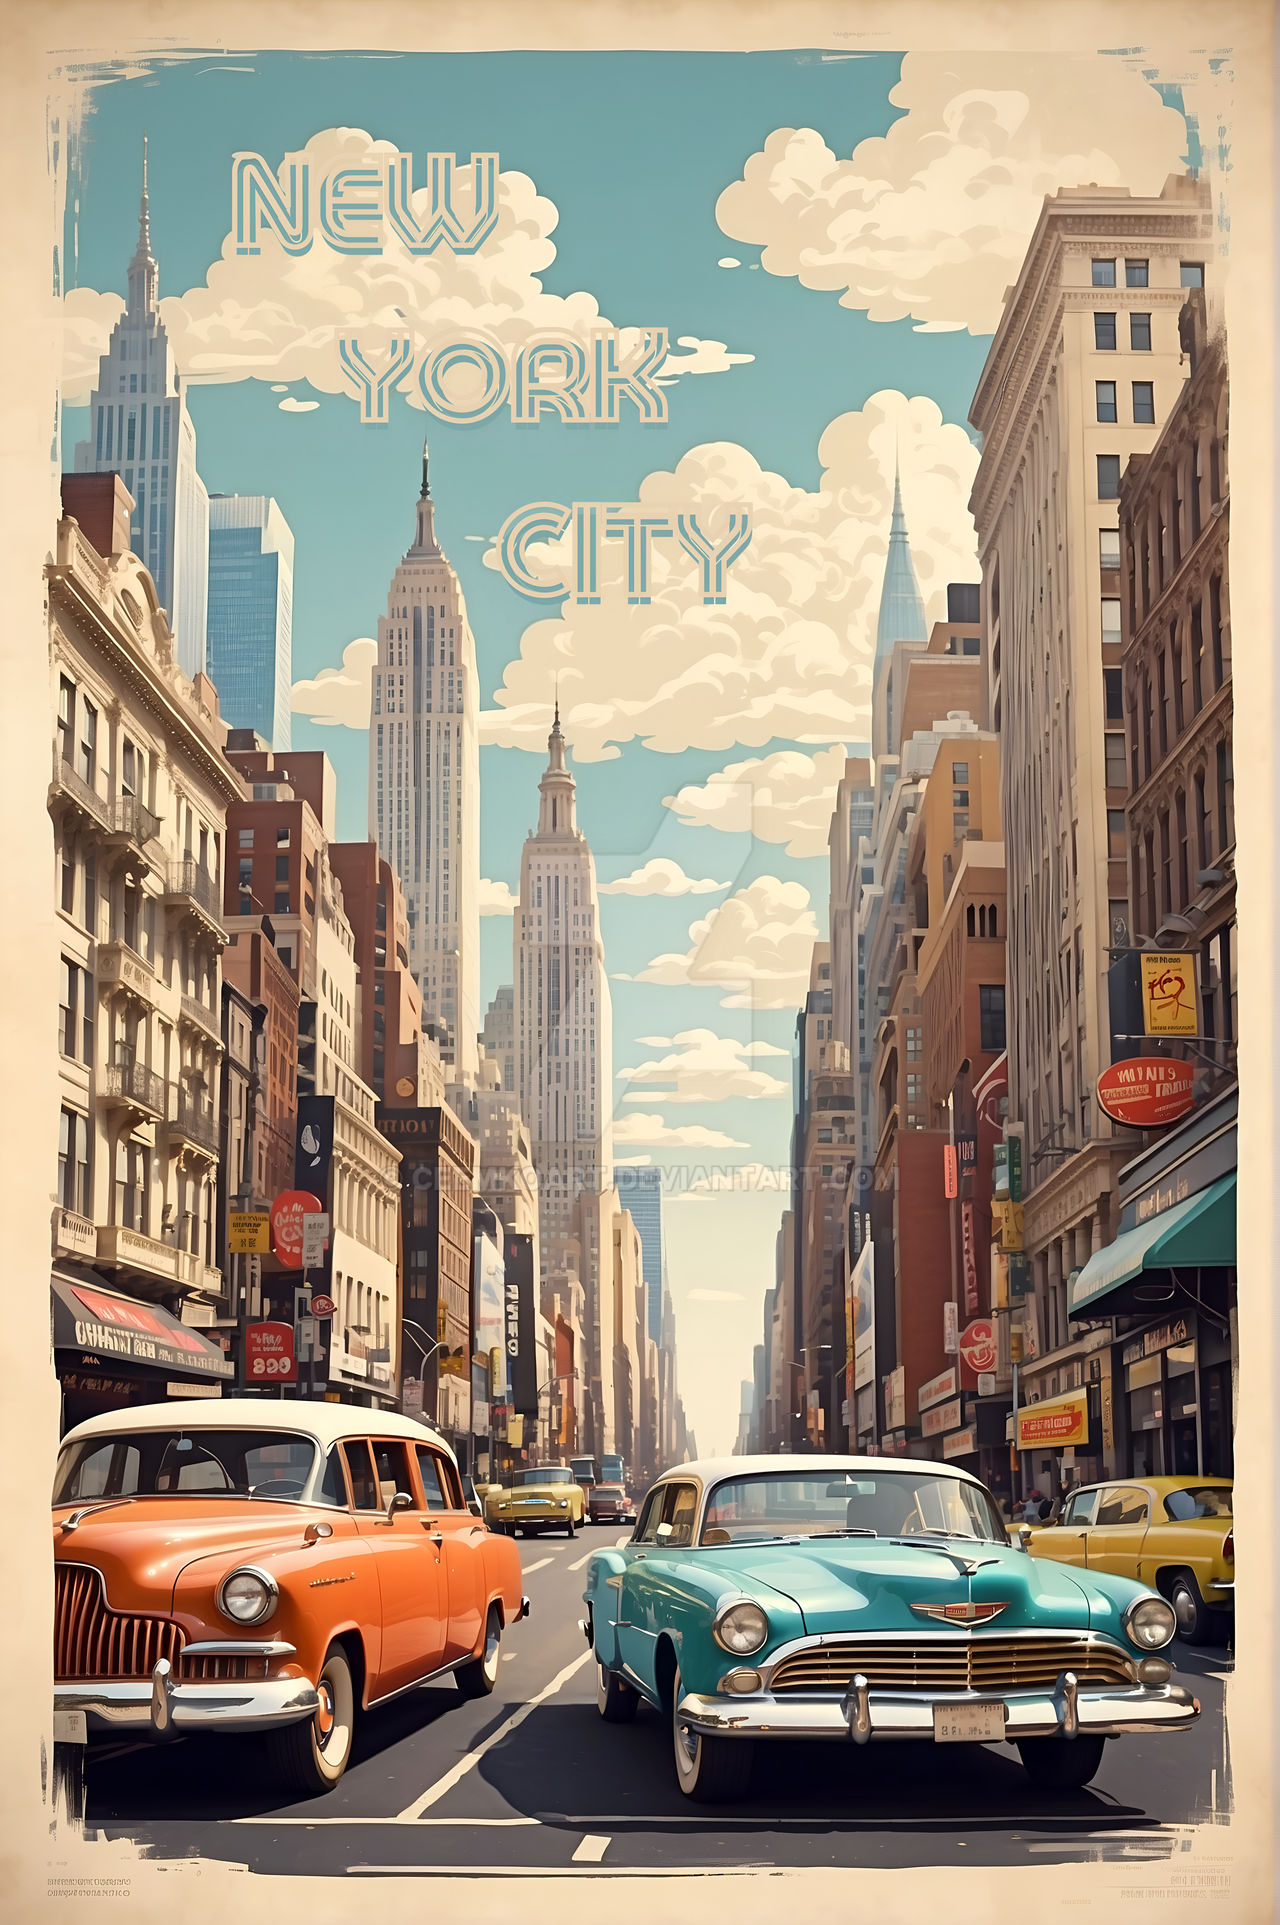 NY Vintage Travel Poster, New York, Travel, Decoration, Liberty